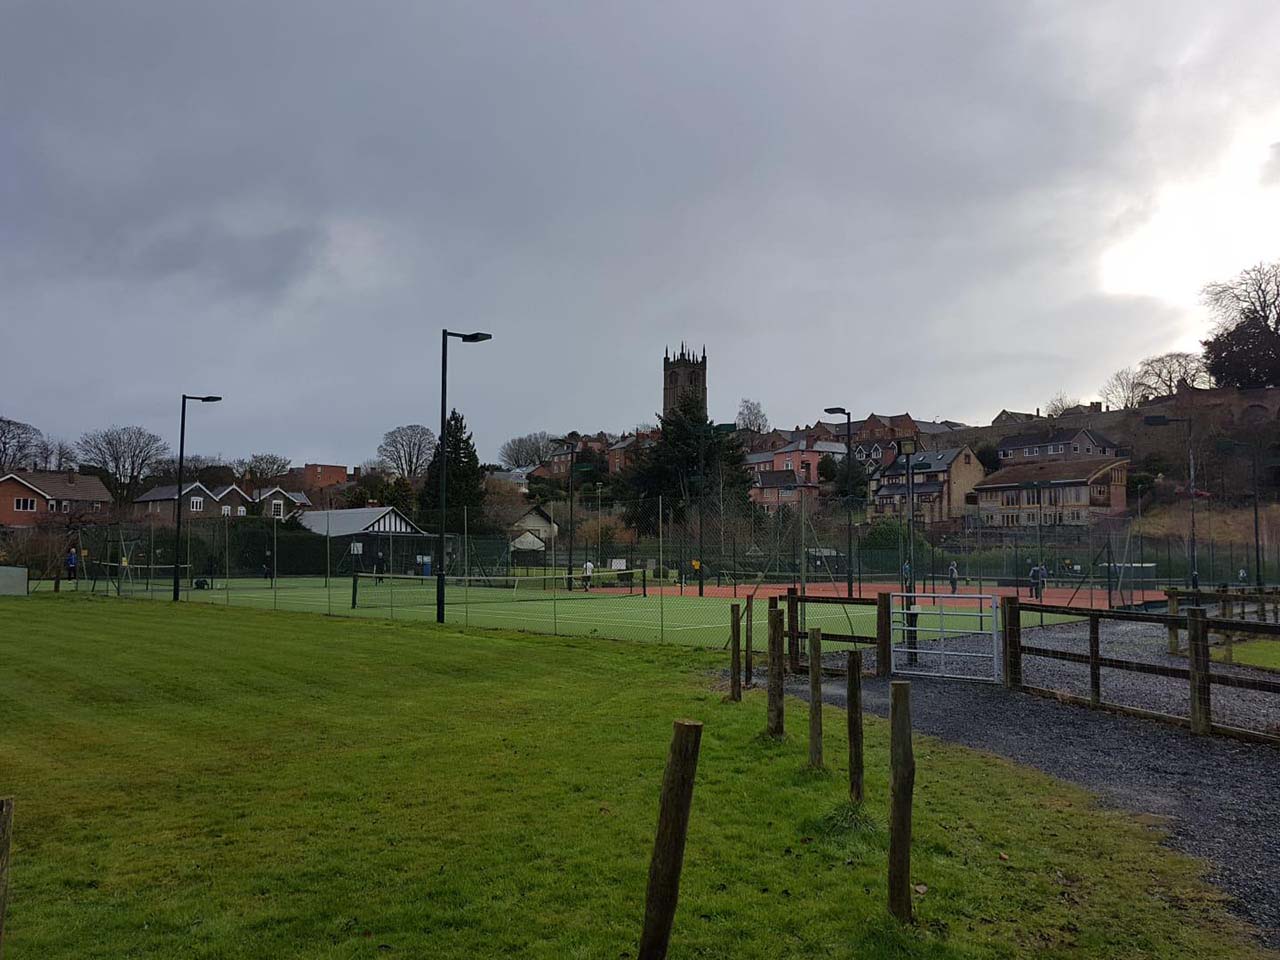 Ludlow Castle Tennis Club